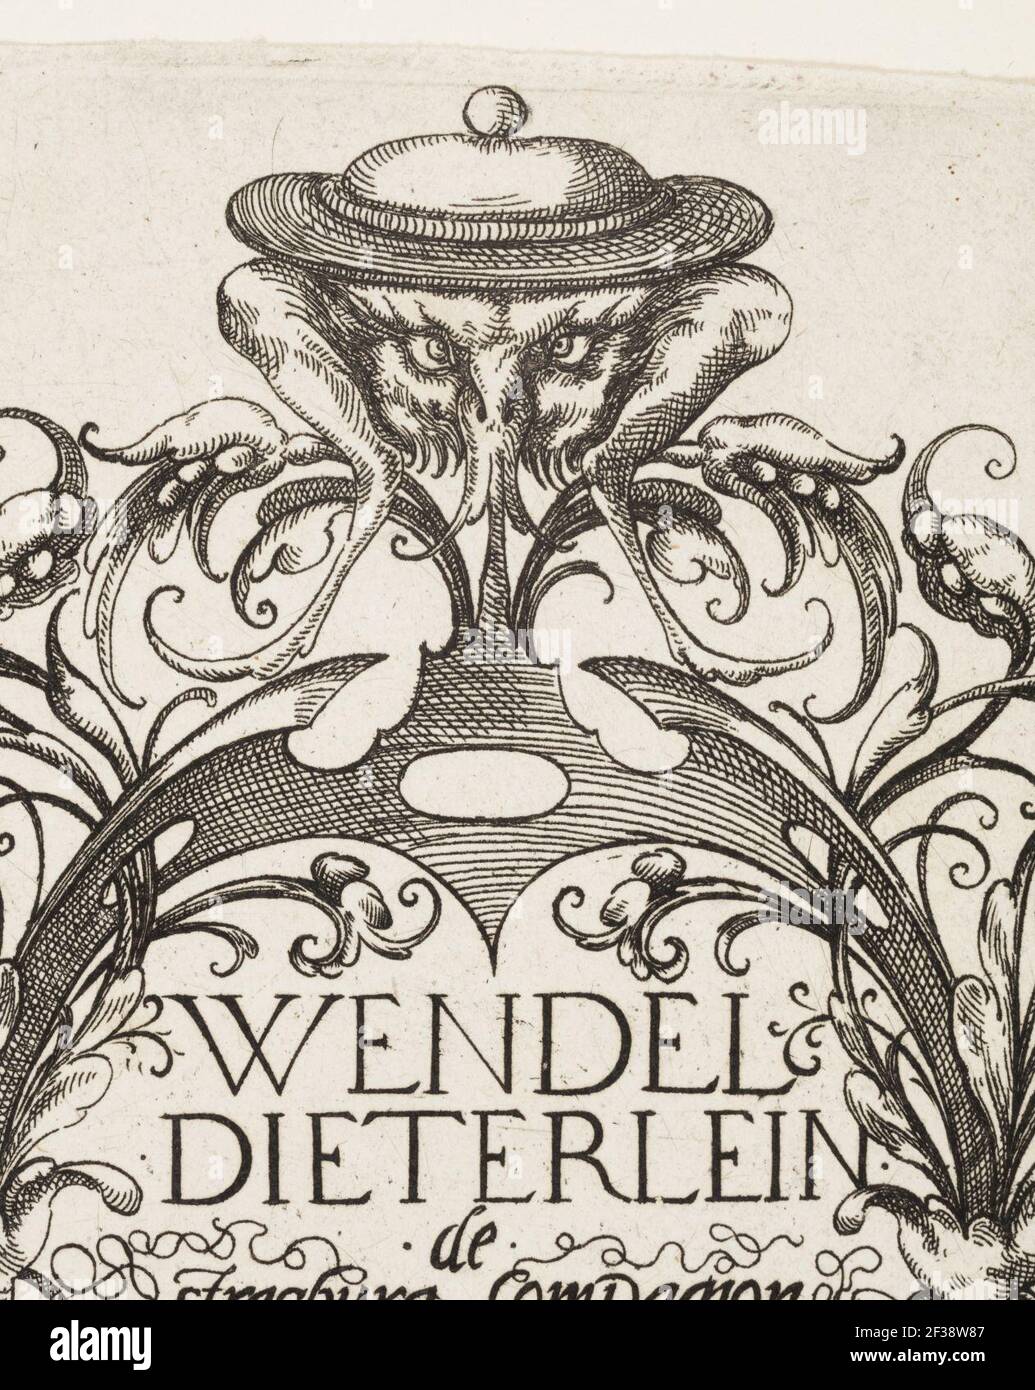 Print, Plate 4, from Die Folge der phantastischen Schmucksträβe (Suite of Fantastic Ornamental Bouquets), 1614 Stock Photo